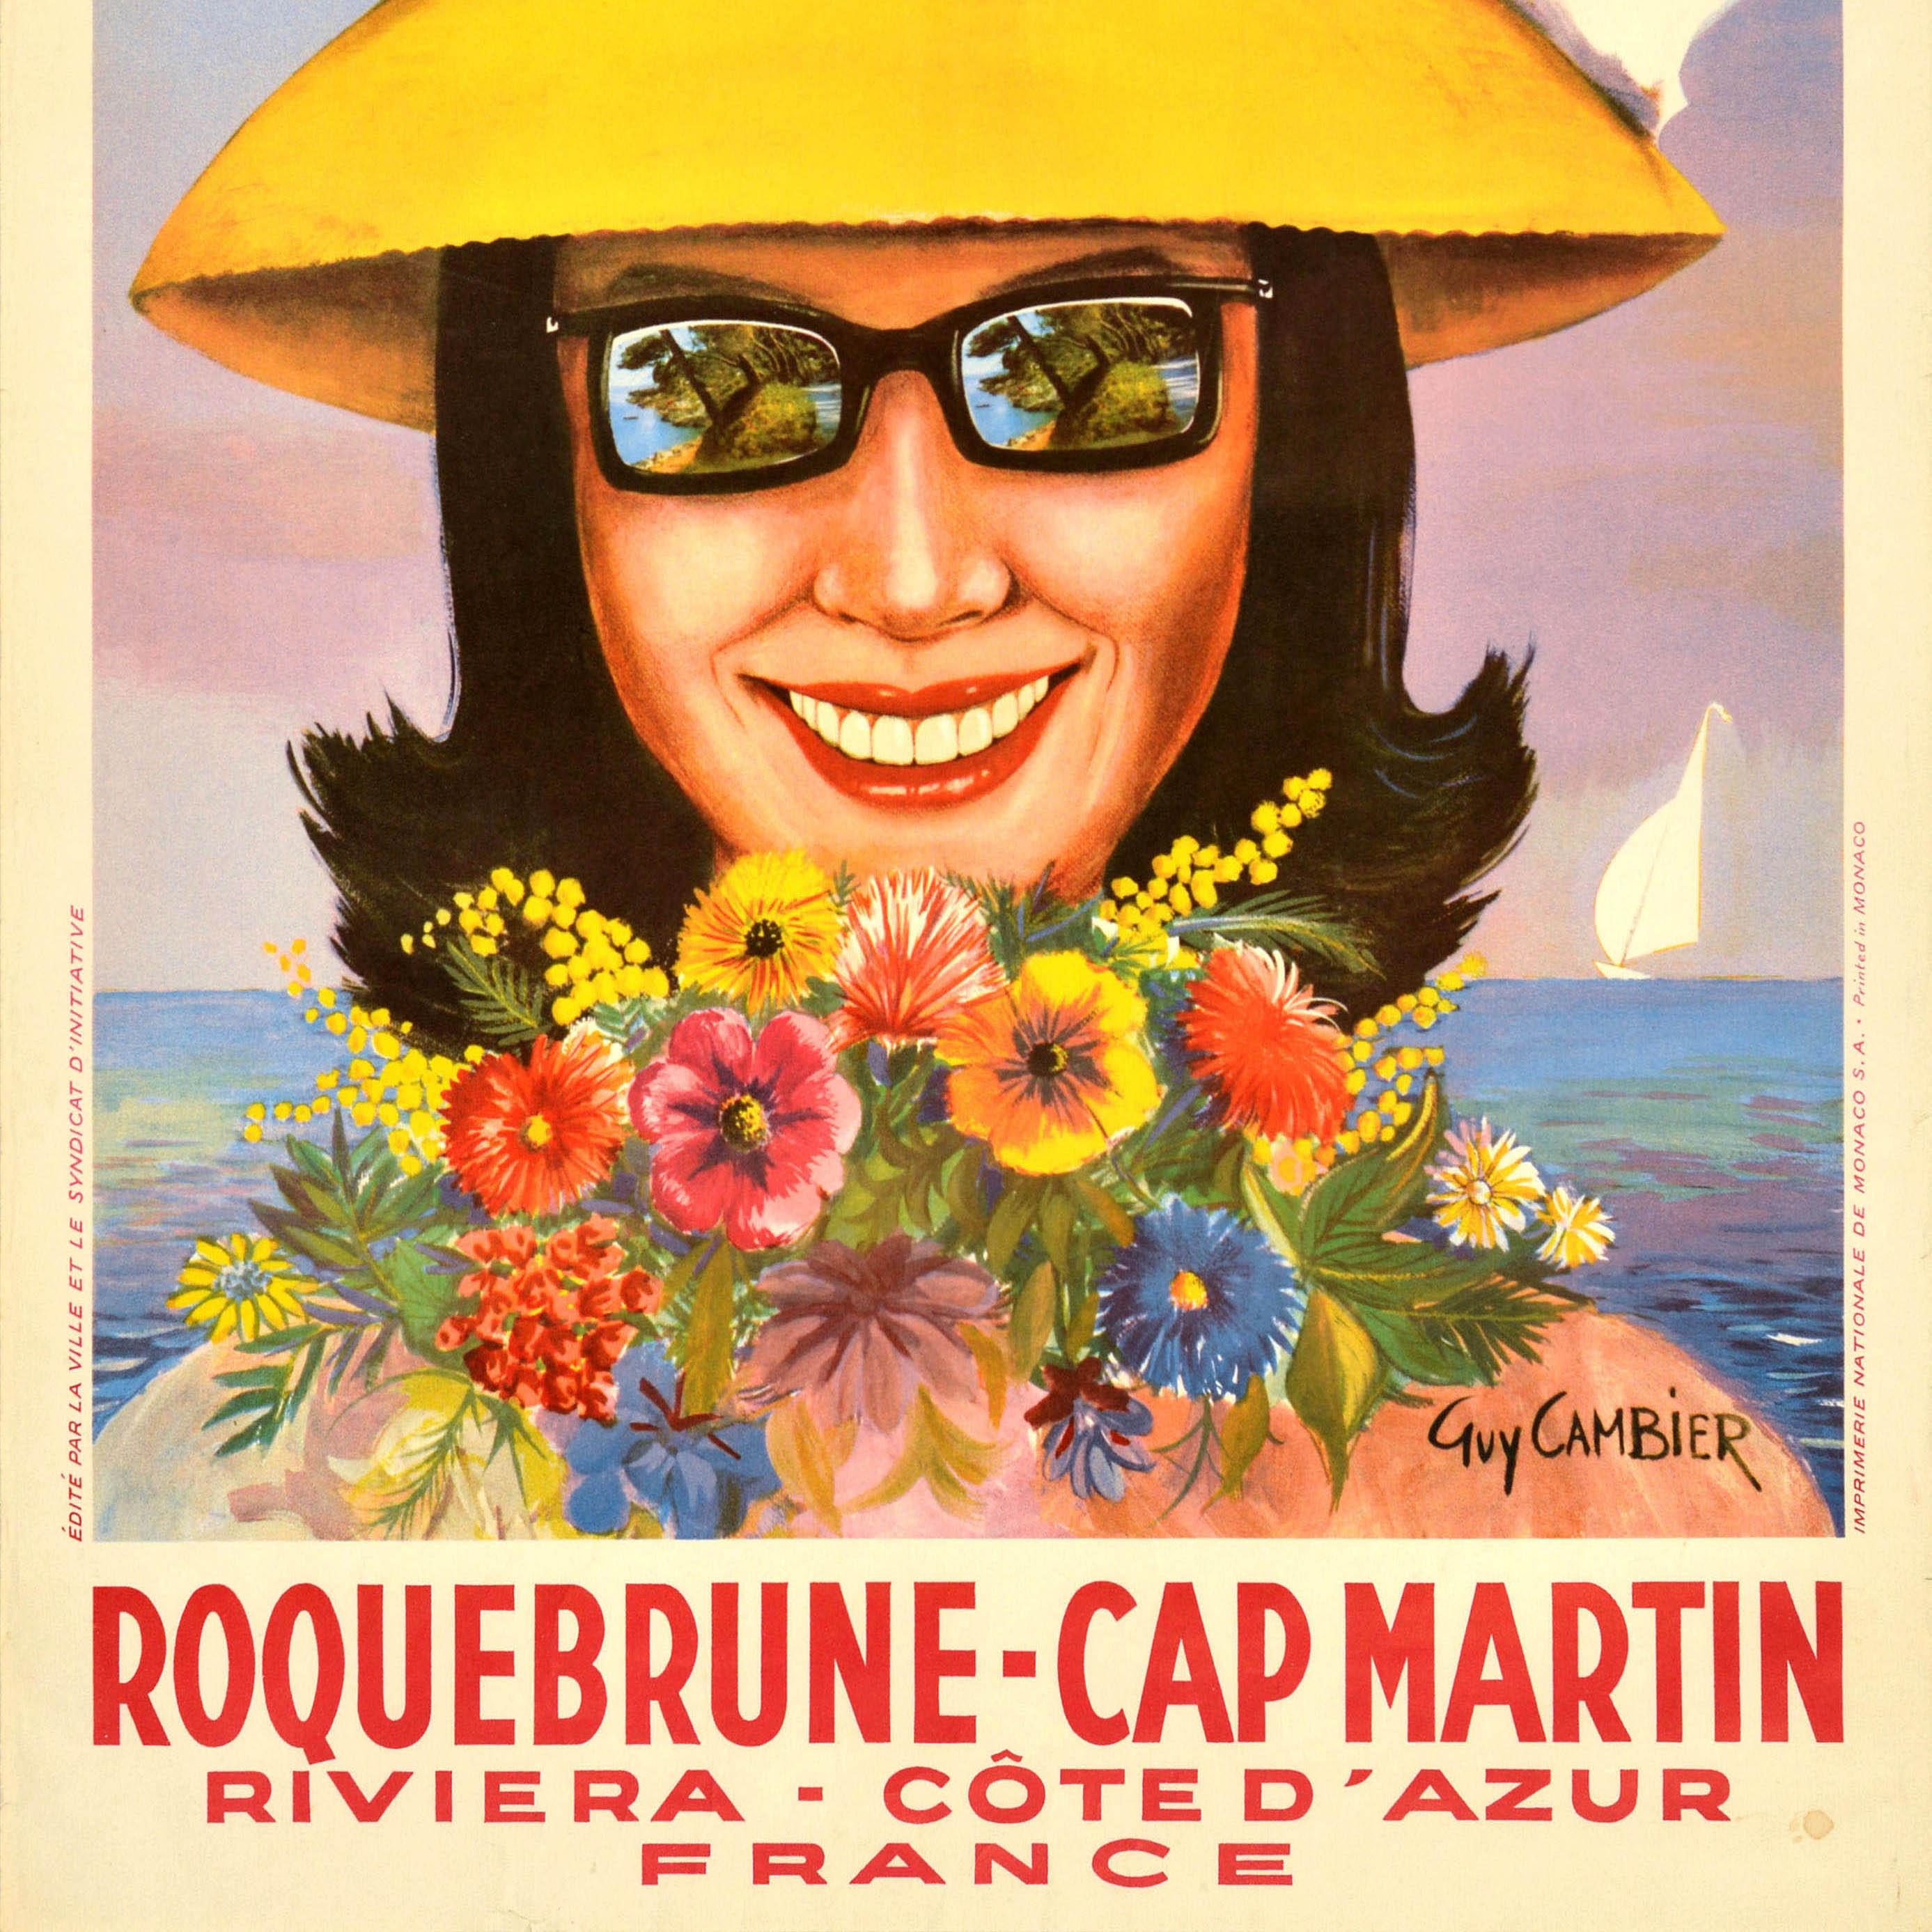 Original Vintage Travel Poster Roquebrune Cap Martin Riviera Cote d'Azur France In Good Condition For Sale In London, GB